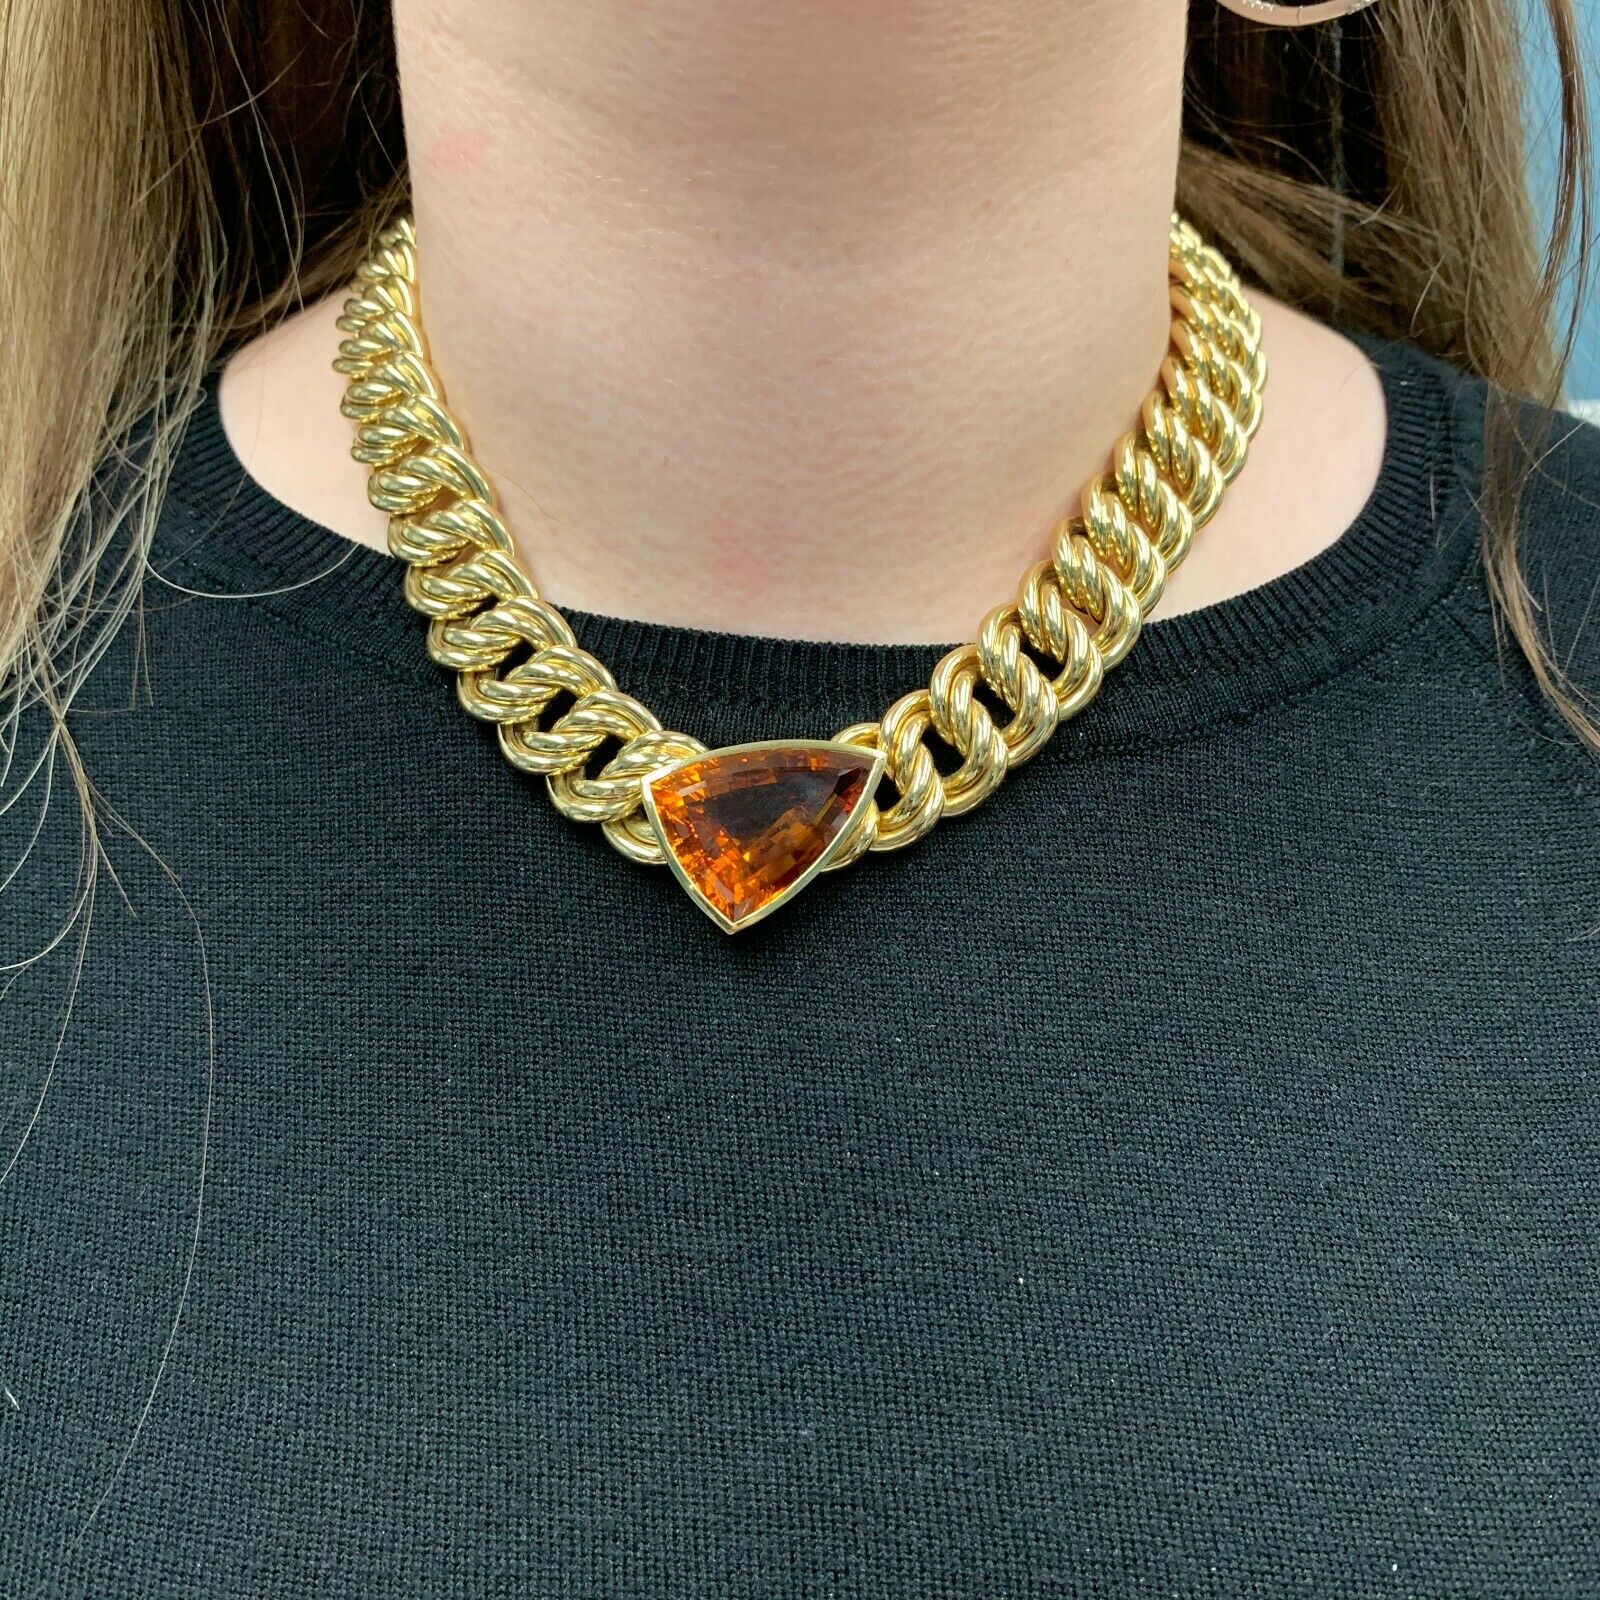 X3147 Vintage necklace